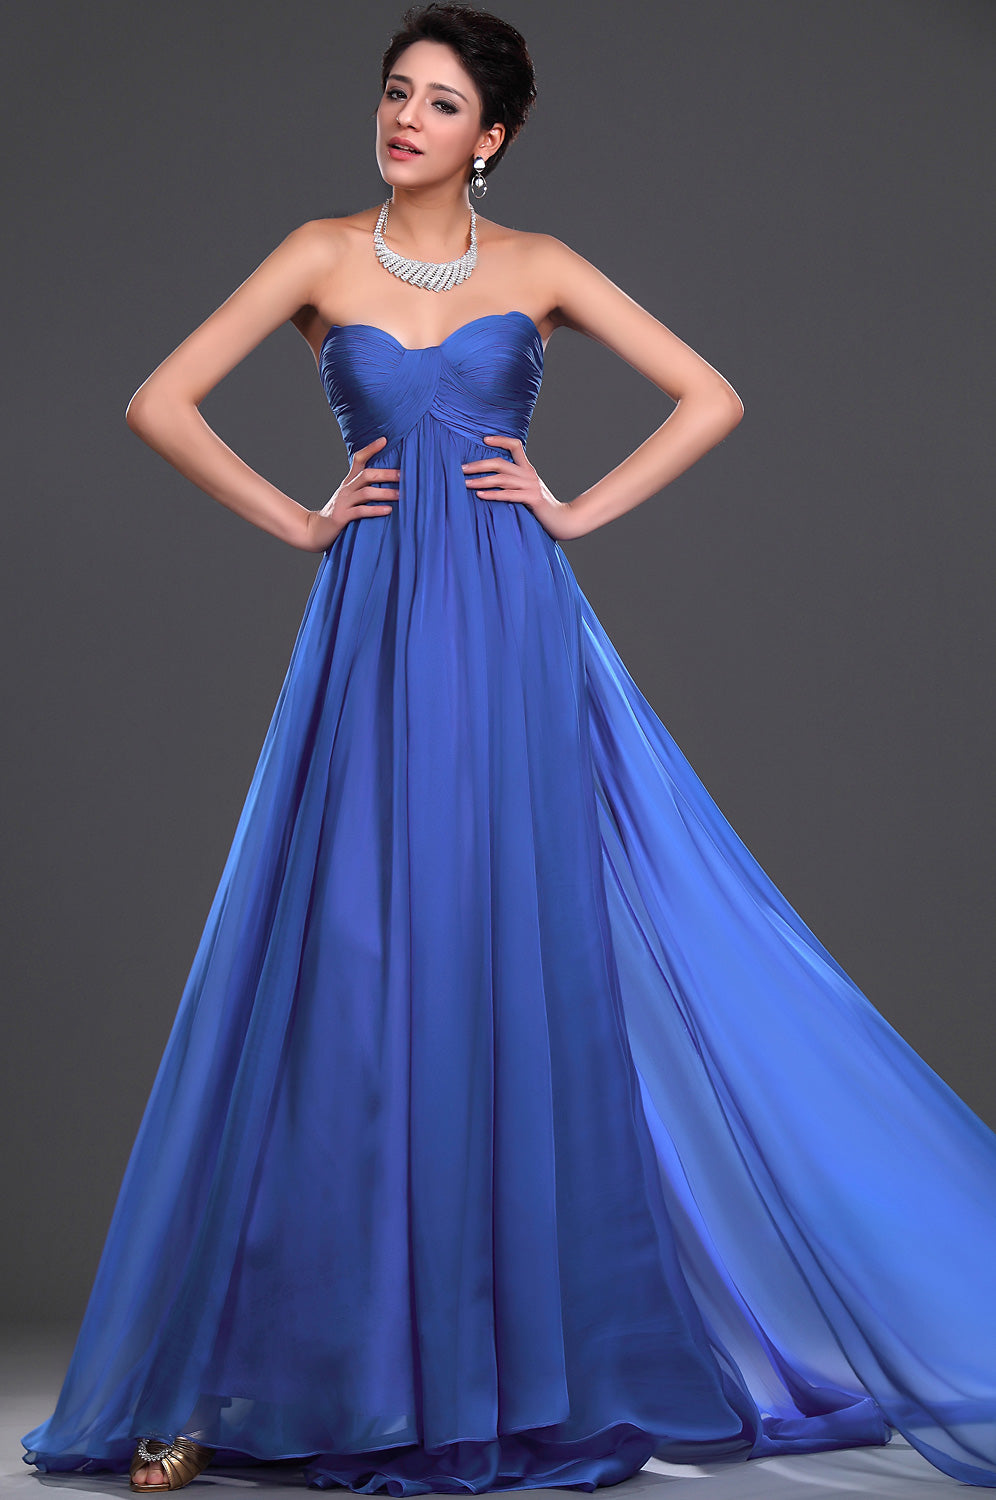 A-Line Light Royal Blue Chiffon Sweetheart With Draping Bridesmaid Dress(UKBD03-477)